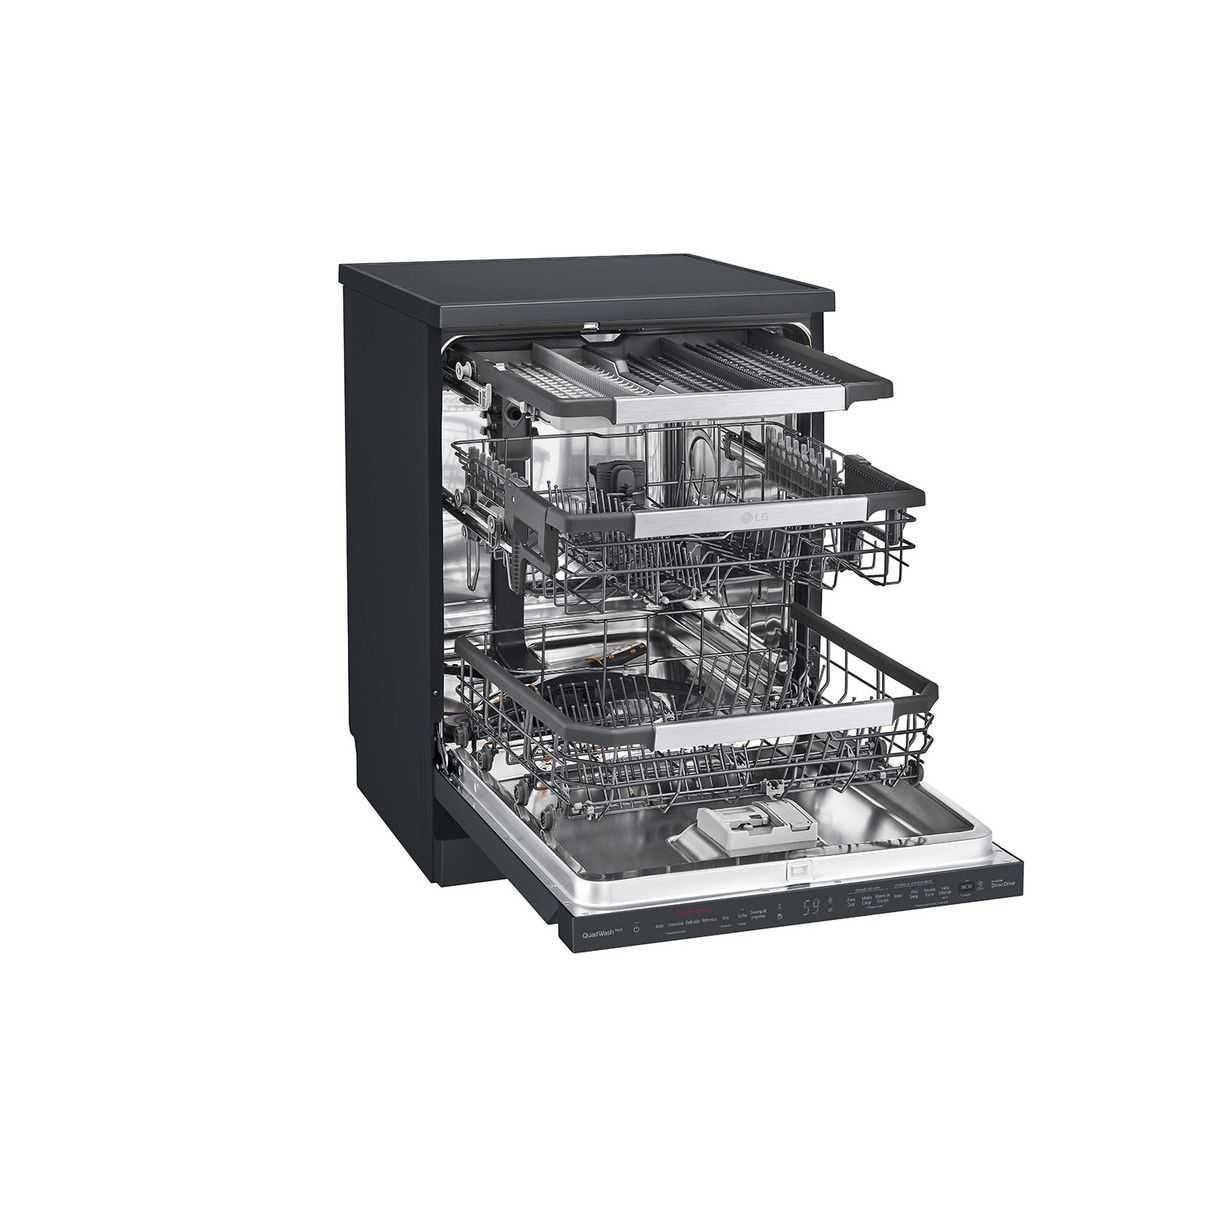 LG Digital Dishwasher With Inverter Technology, 14 Place Settings, 10 Programs, Black - DFC335HM